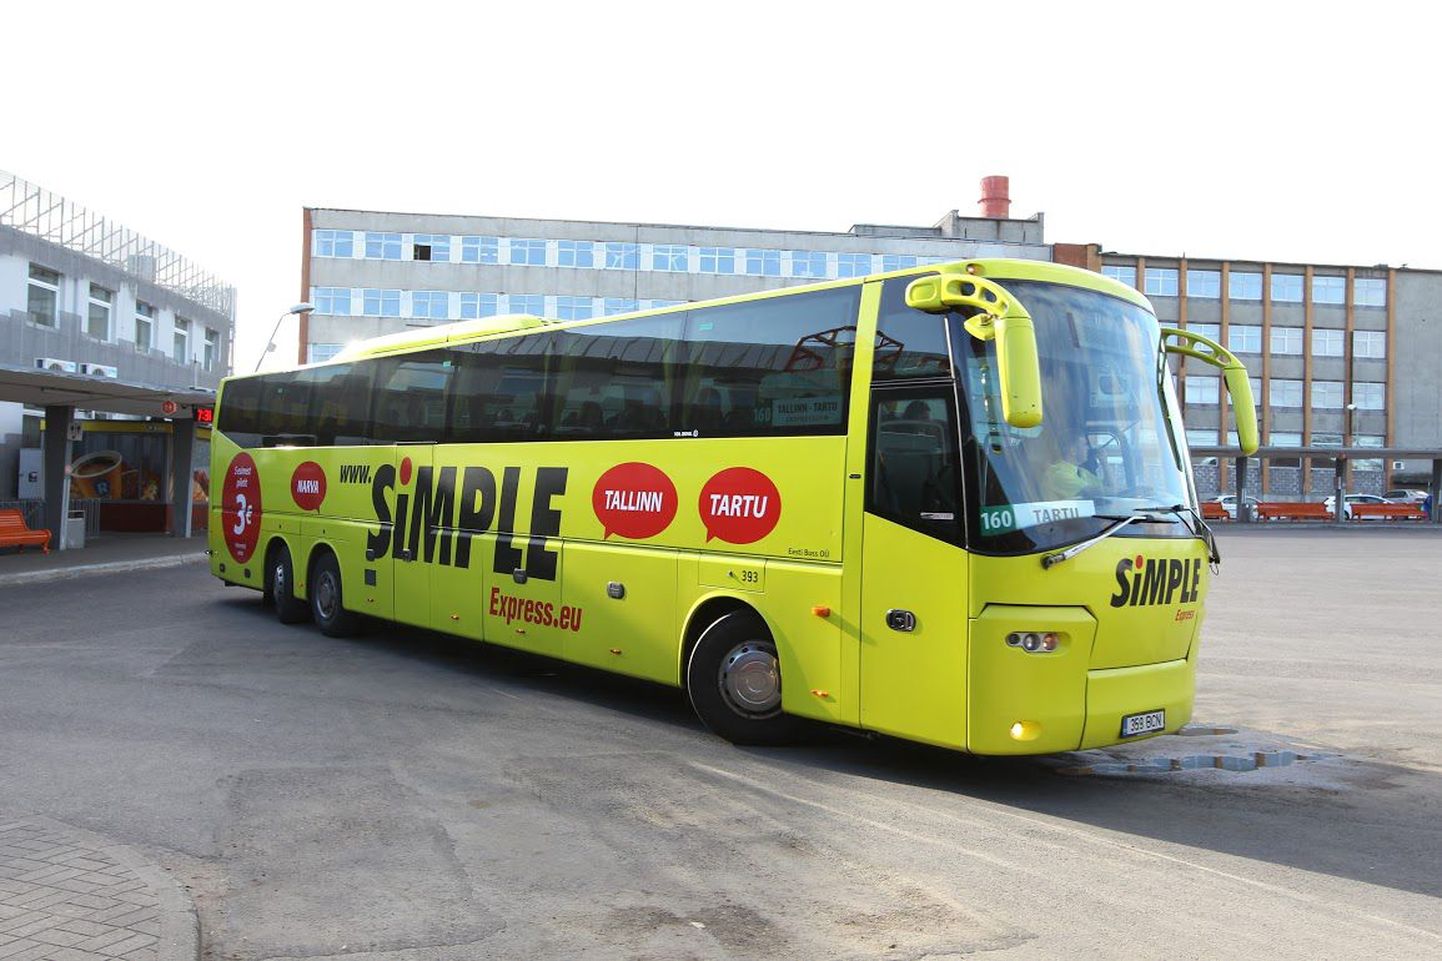 Simple Express buss